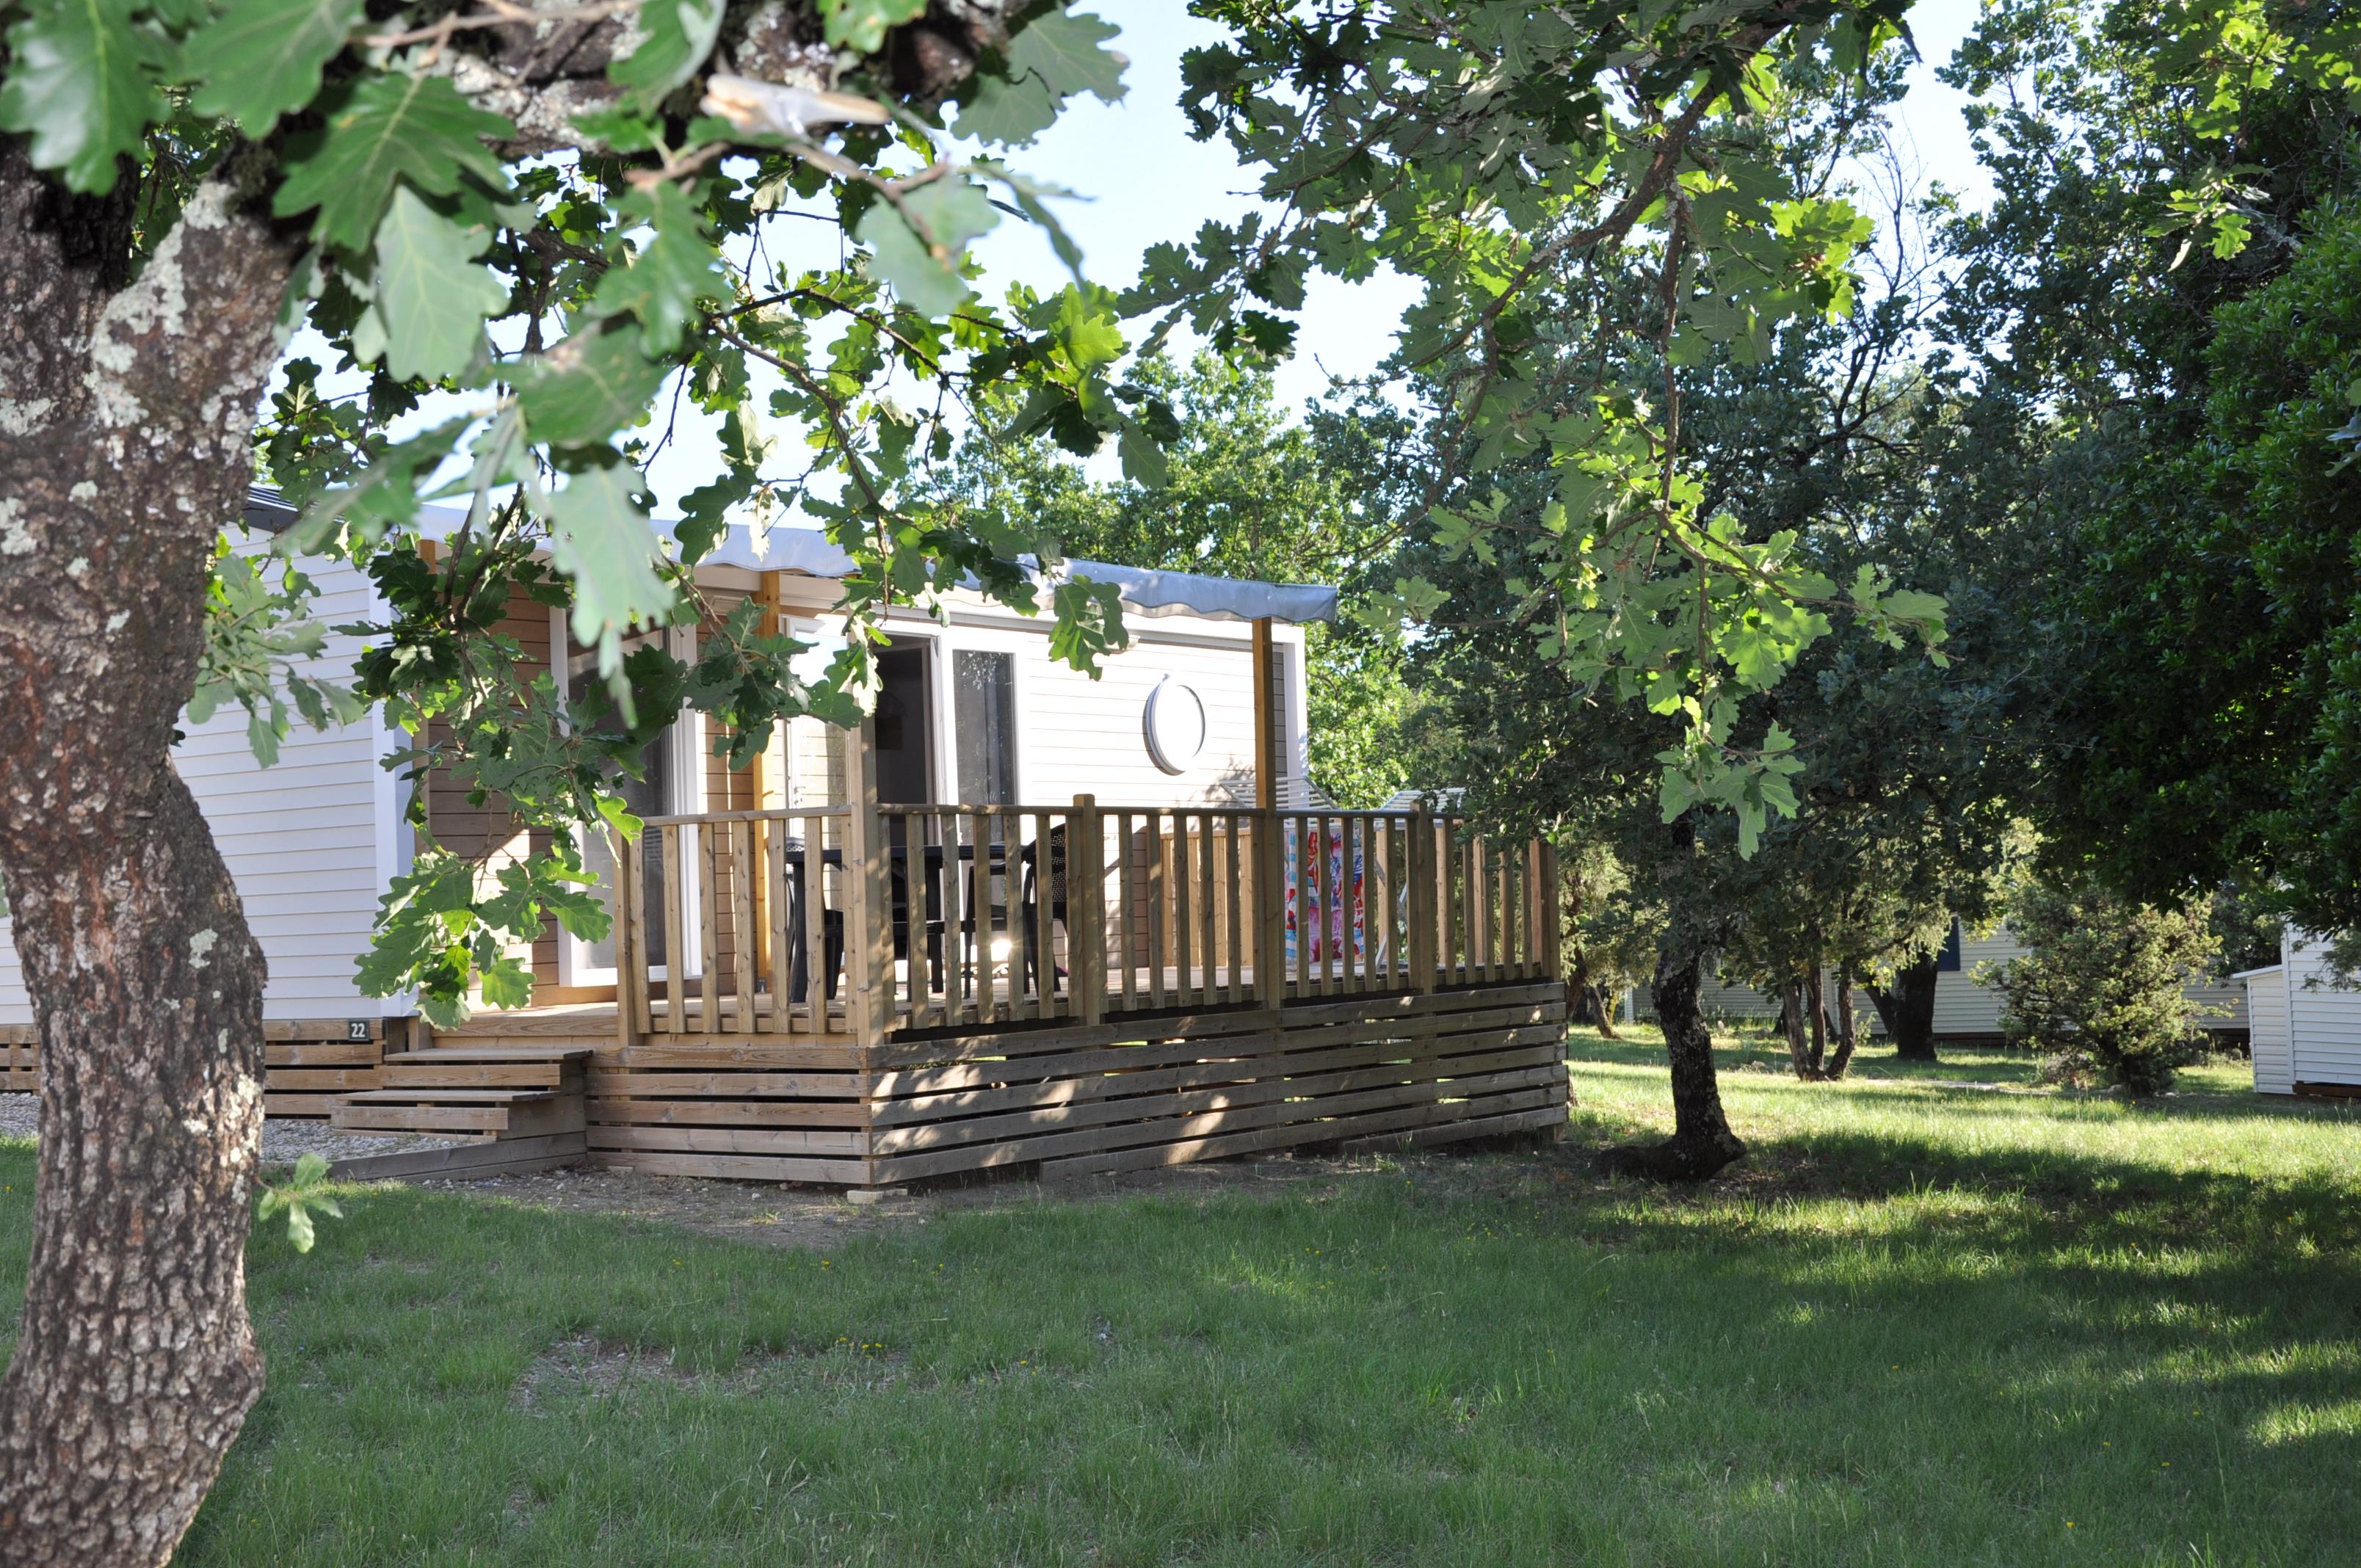 Location - Cottage Premium Climatisation S (30M² + 18 M² De Terrasse Avec Pergola, 2 Chambres) - Camping L'Ombrage